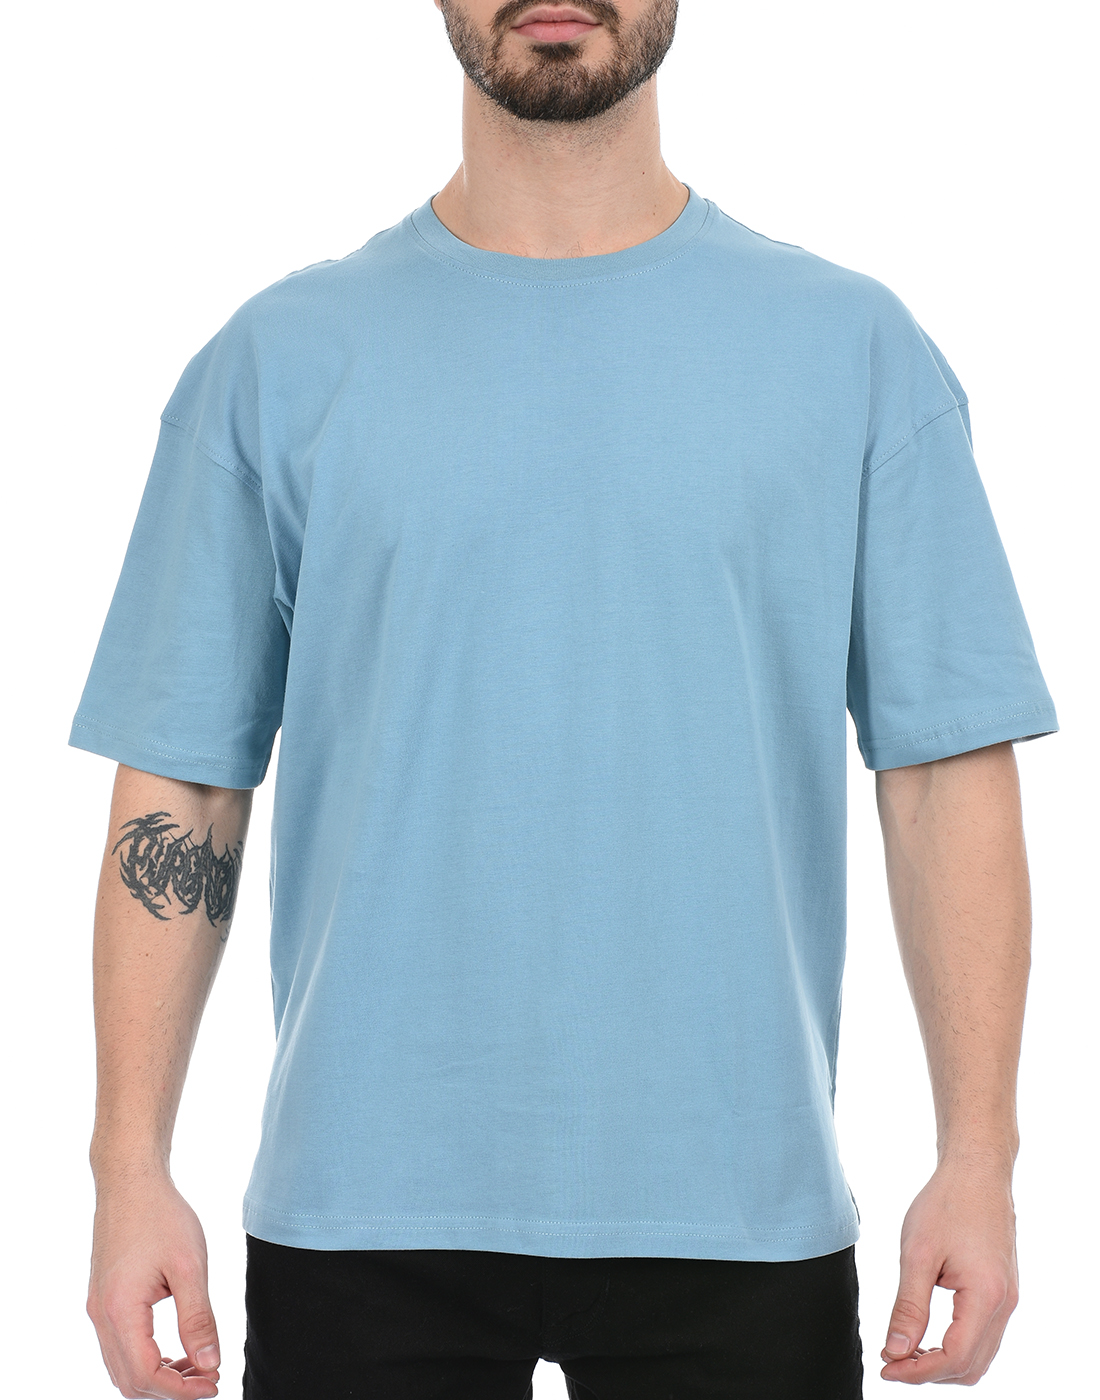 Oneway Unisex Solid Blue T-Shirt